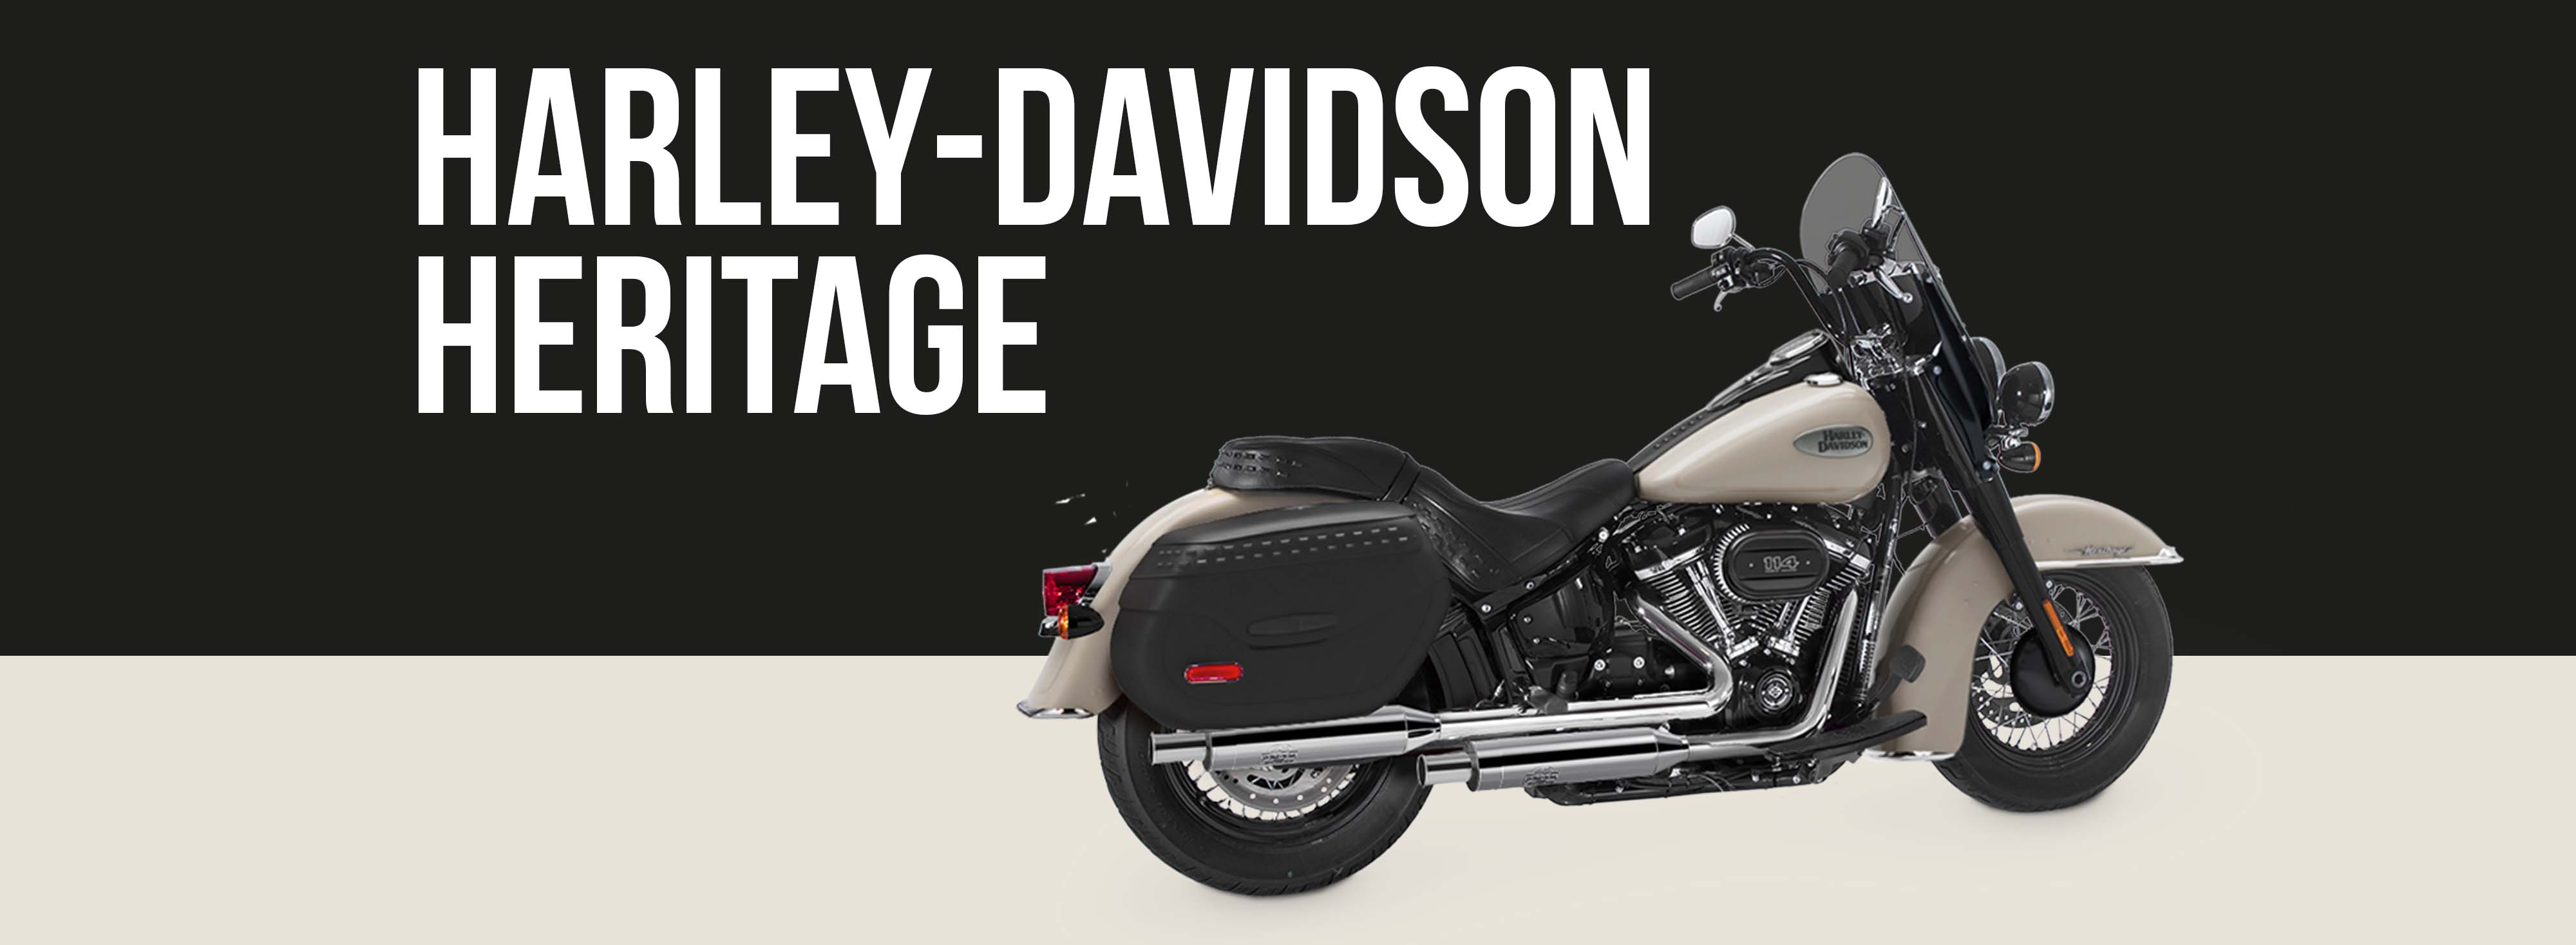 Harley-Davidson Heritage Motorcycle Brand Page Header